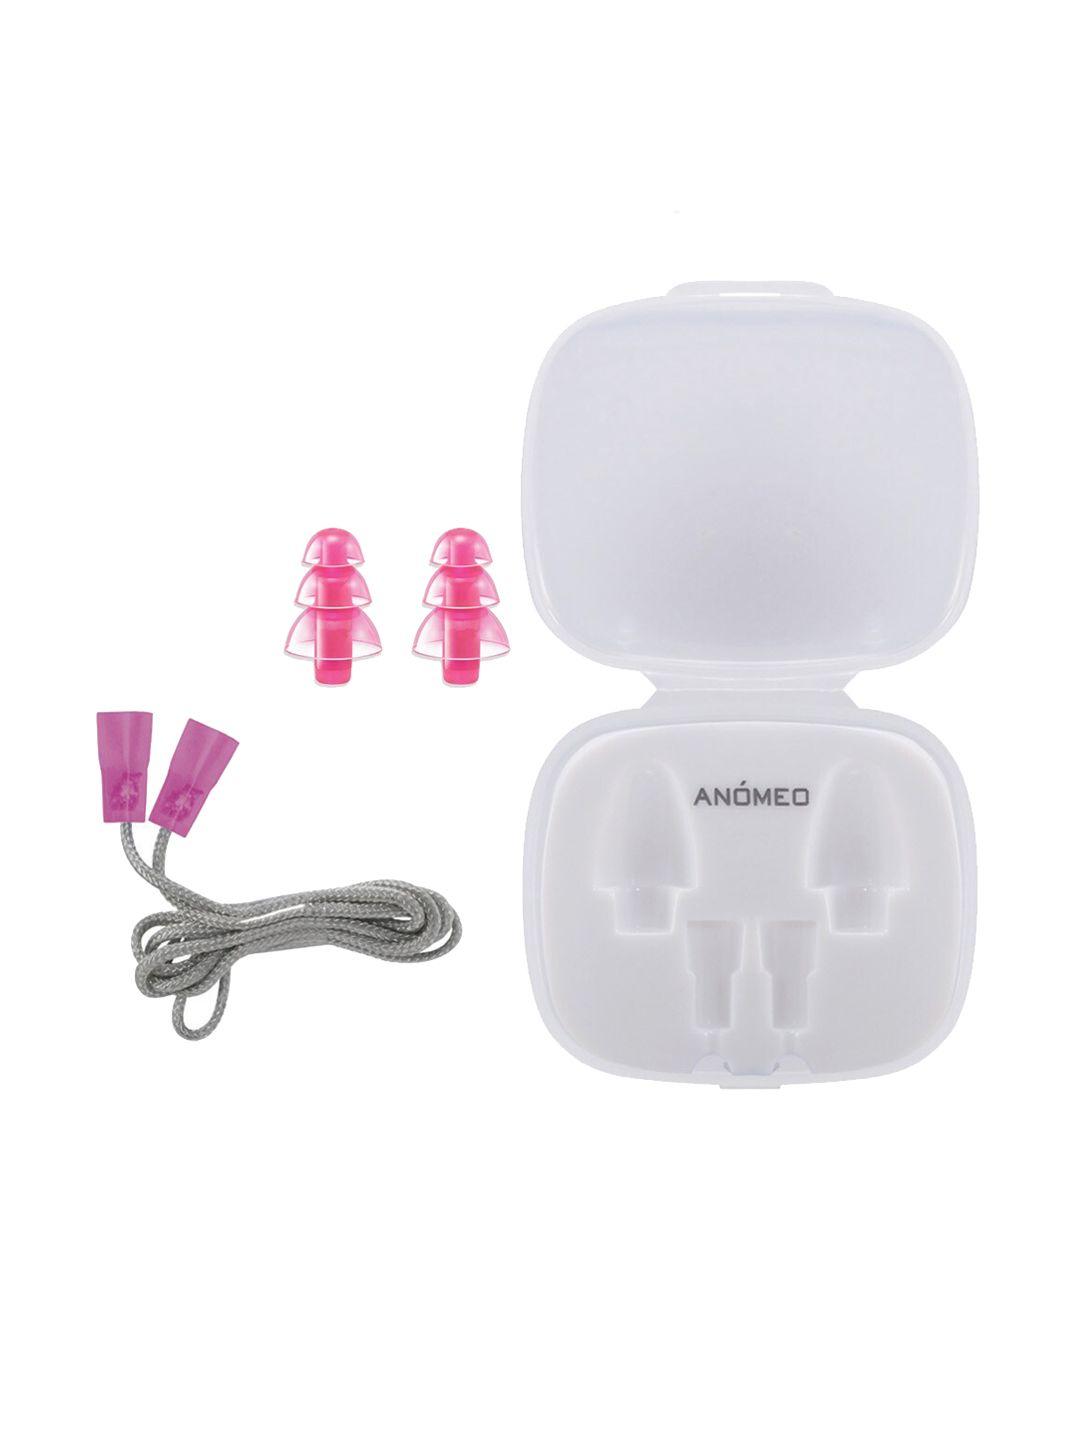 anomeo unisex ear plugs - music pink travel accessory